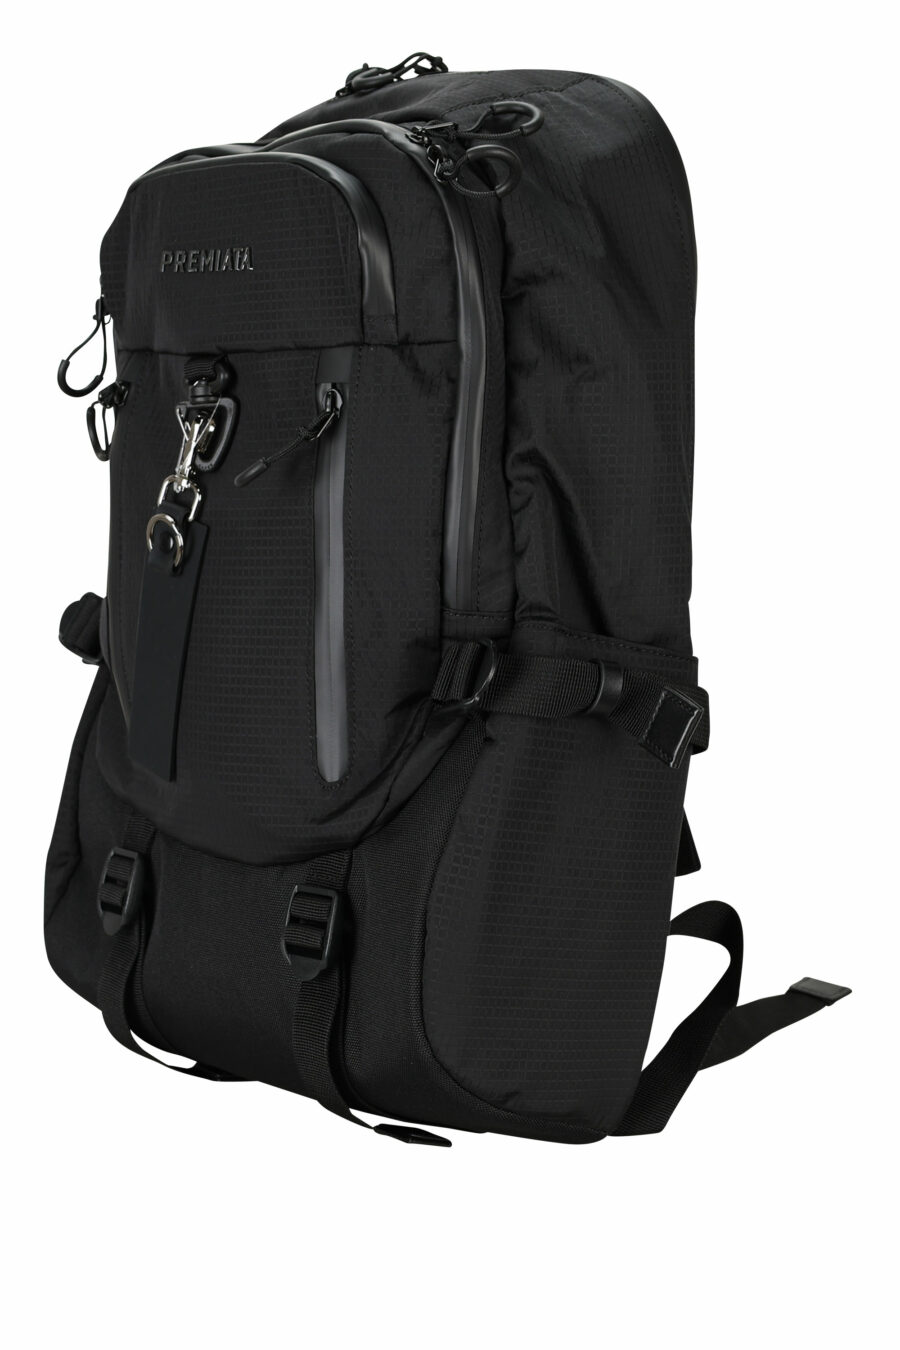 Black backpack VENTURA 2115 - 8058326265919 1 1 1